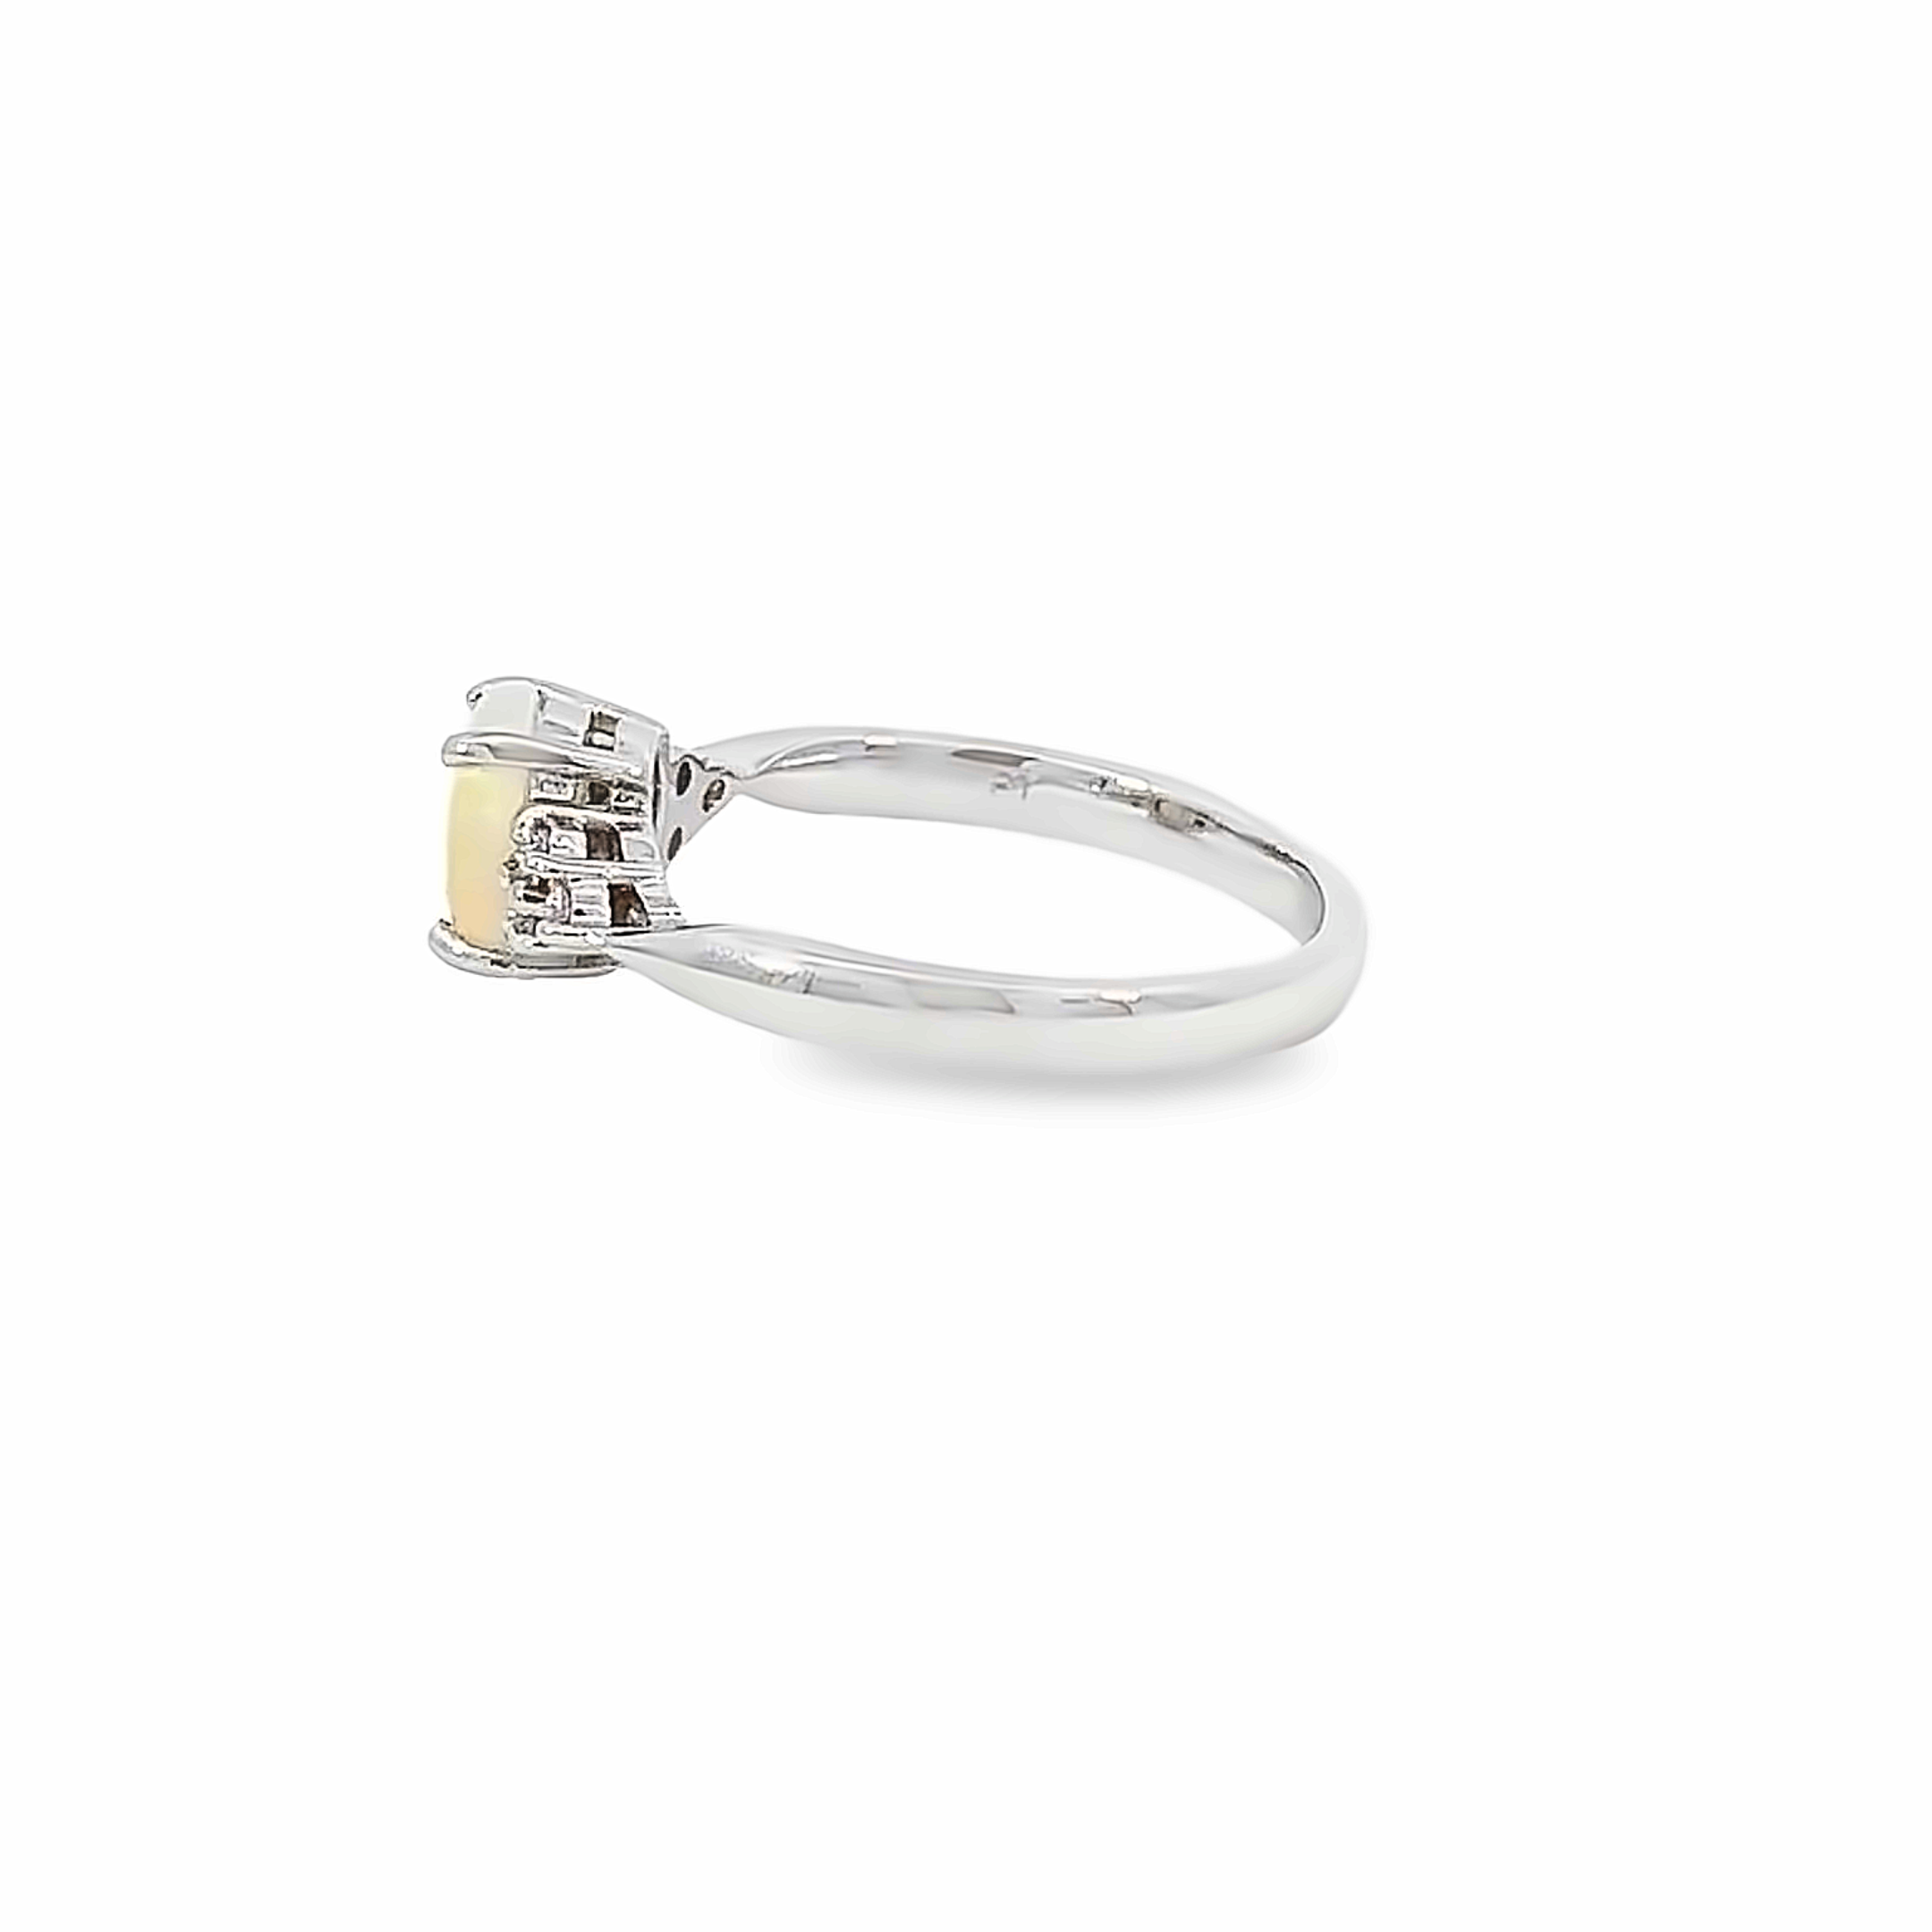 Platinum Crystal Opal engagament ring with Light Pink Diamonds - Masterpiece Jewellery Opal & Gems Sydney Australia | Online Shop